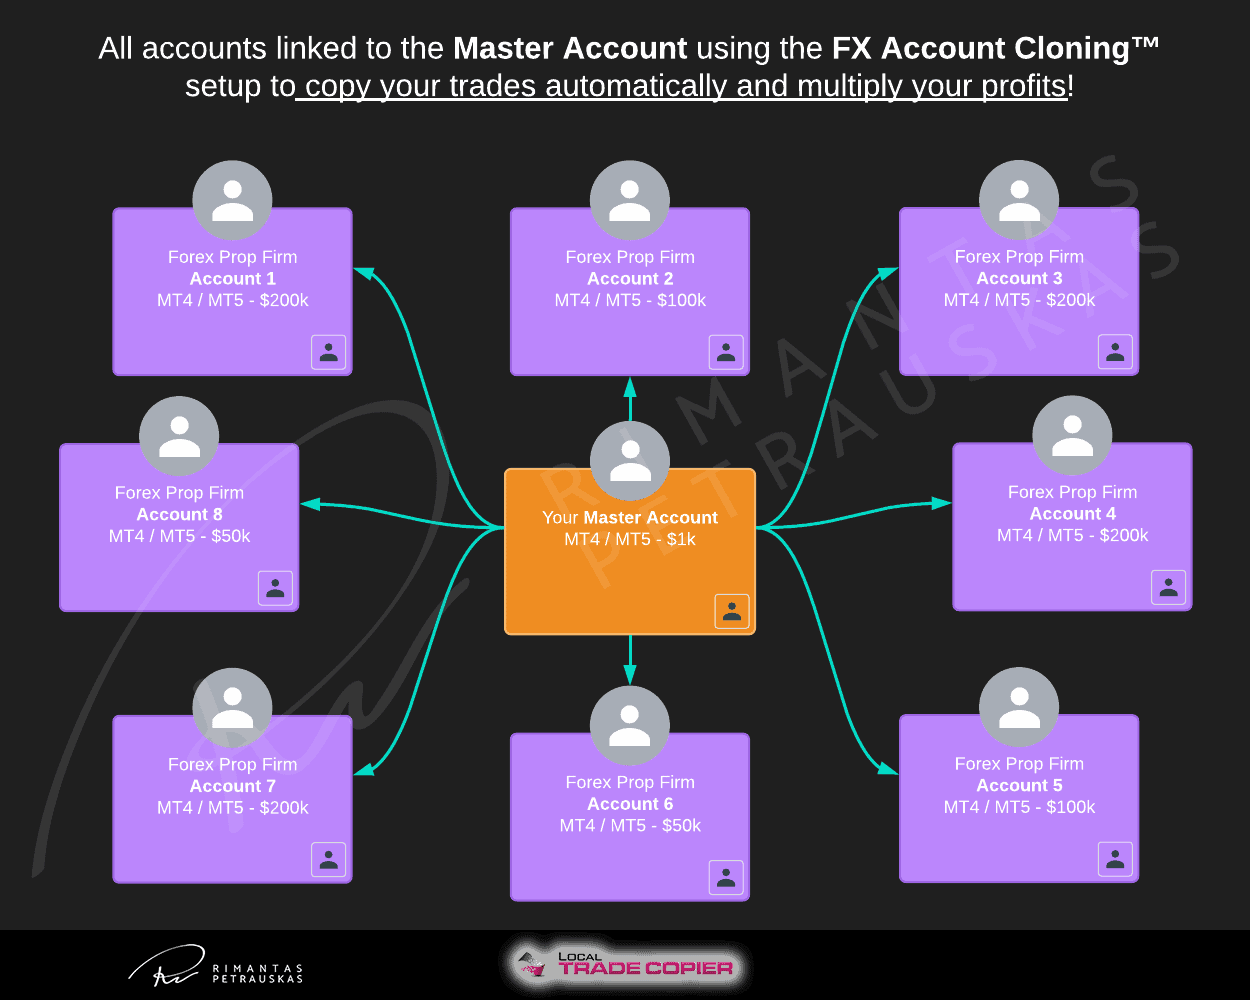 FX Account Cloning™ setup explained